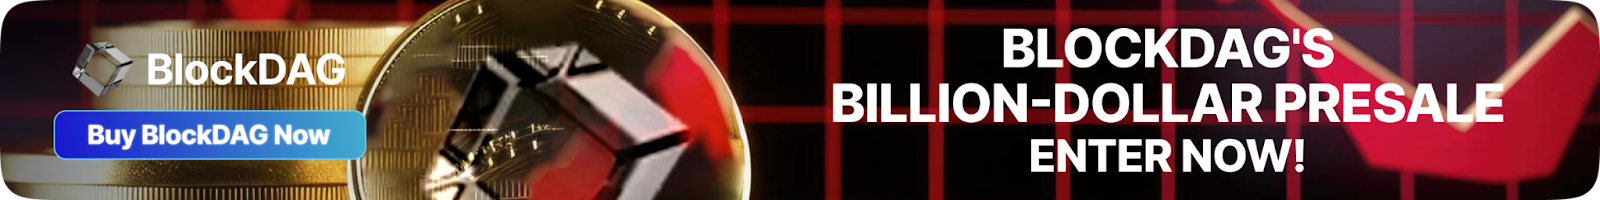 BLOCKDAG'S BILLION-DOLLAR PRESALE ENTER NOW!